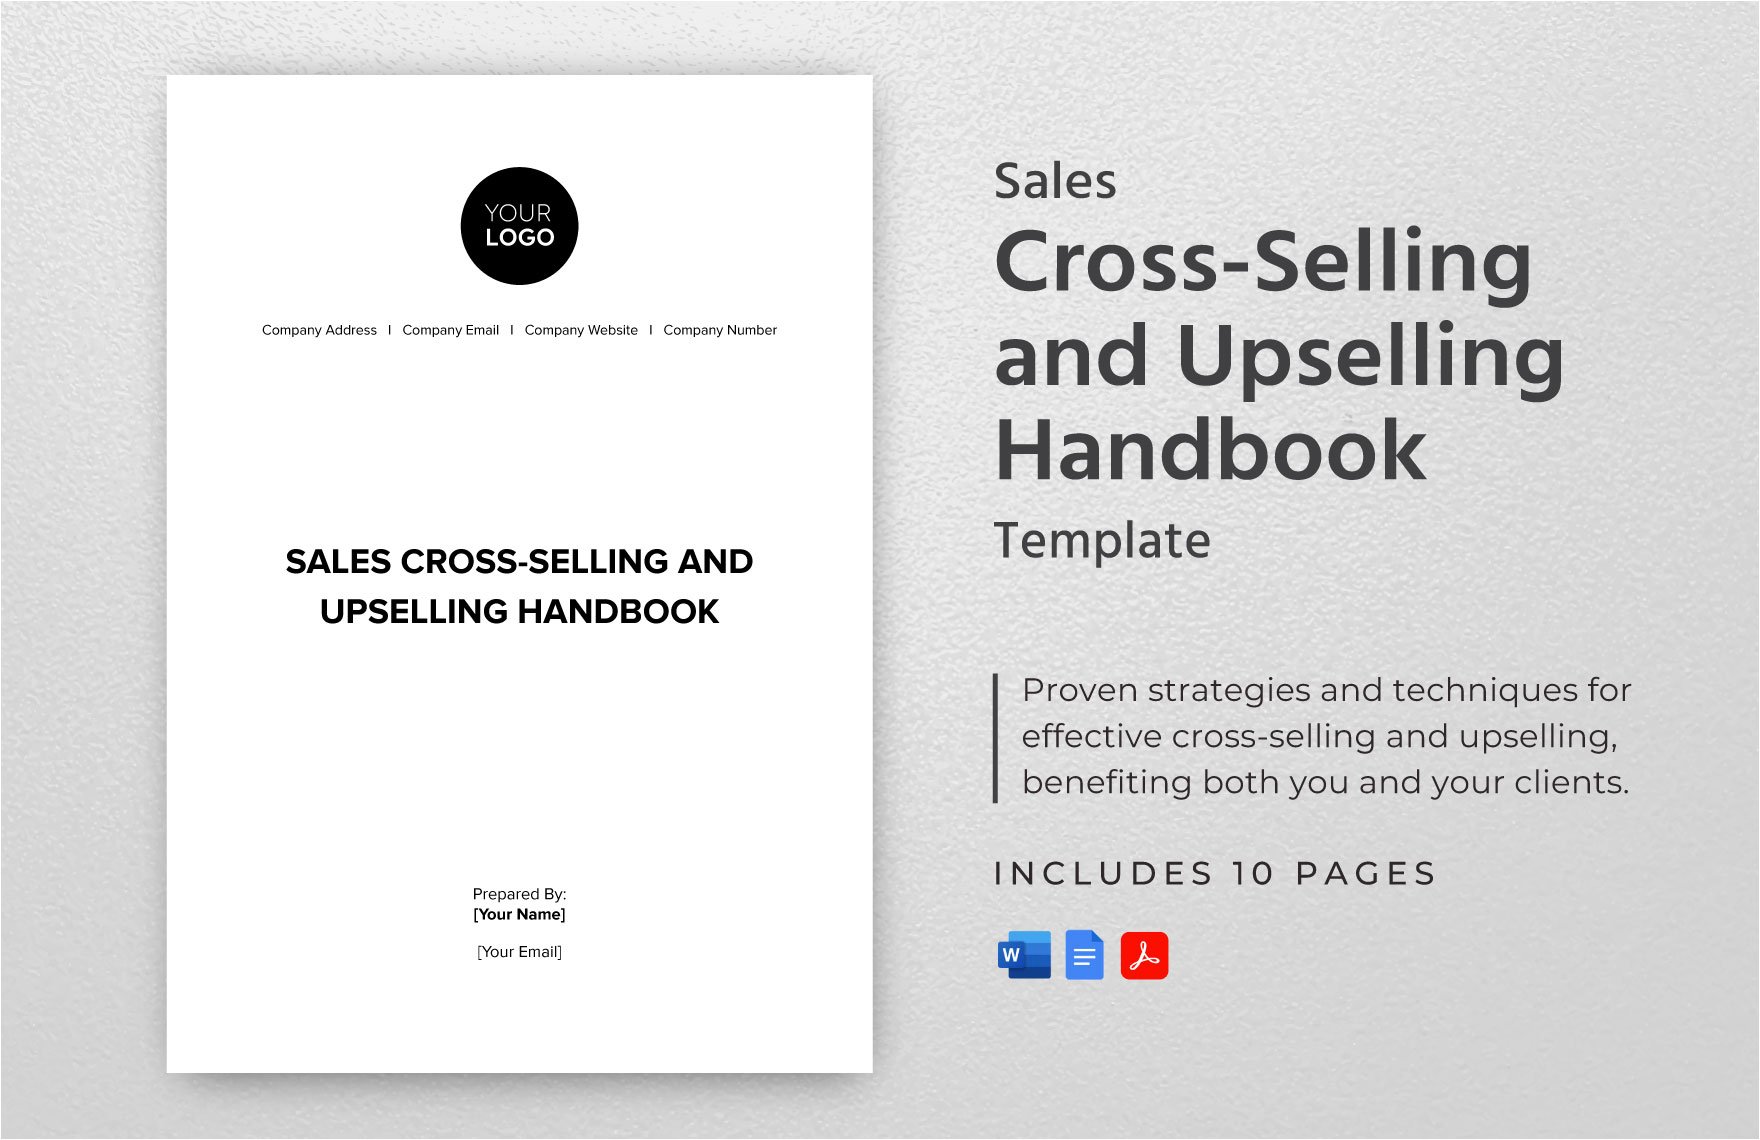 Sales Cross-Selling and Upselling Handbook Template in Word, Google Docs, PDF